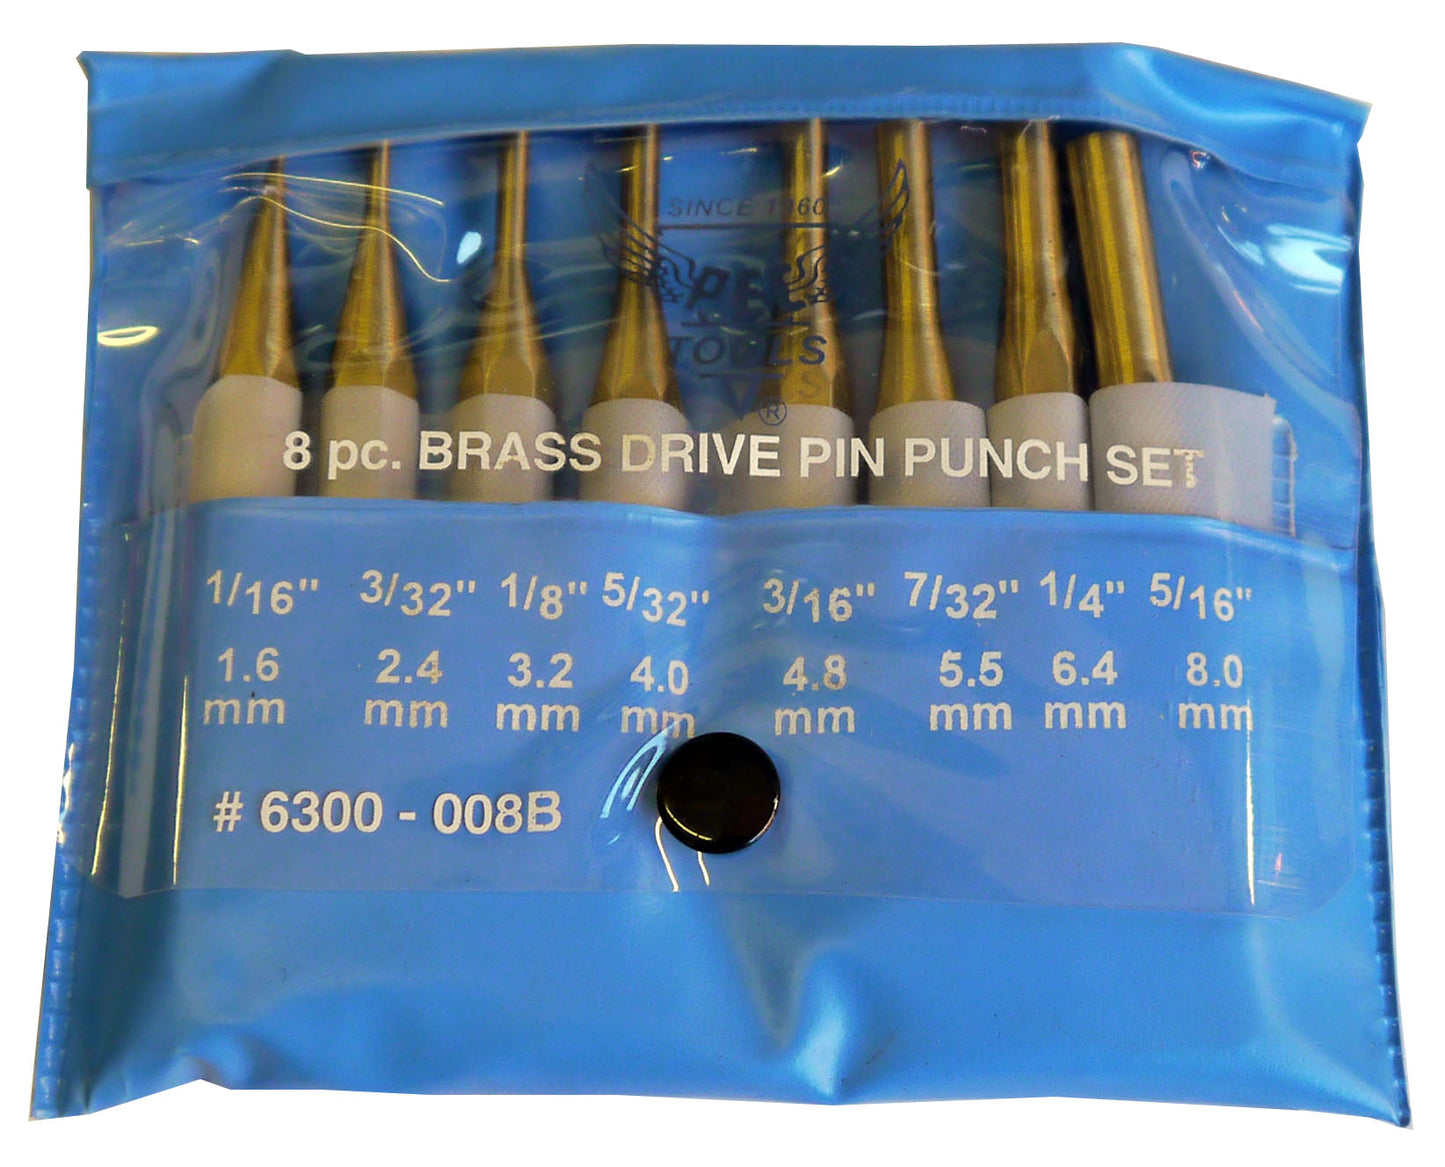 8 pc PEC Brass Drive Pin Punch Set (6300-008B)